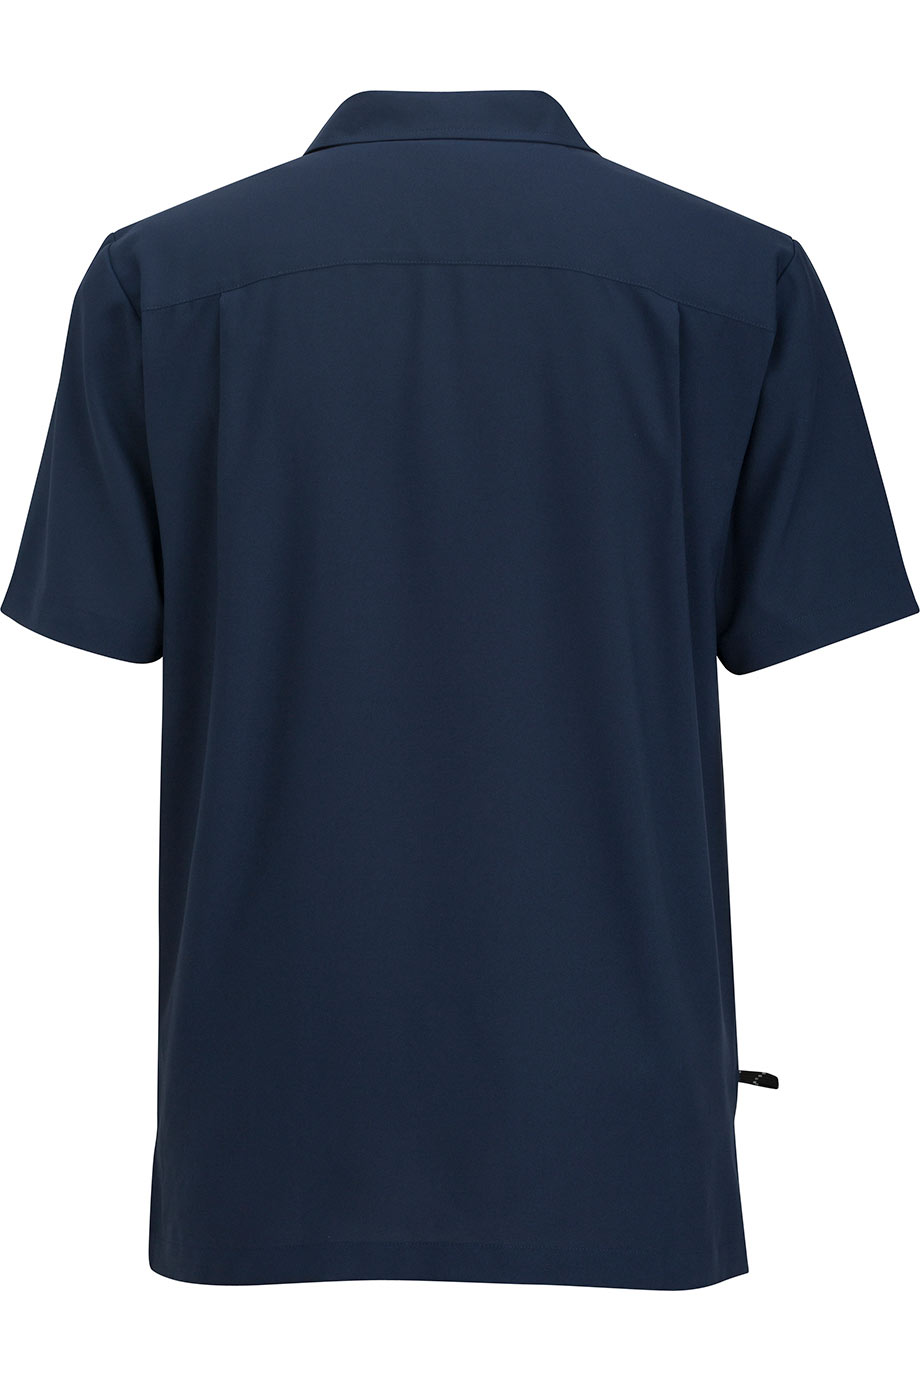 Essential Soft-Stretch Service Shirt | Edwards Garment